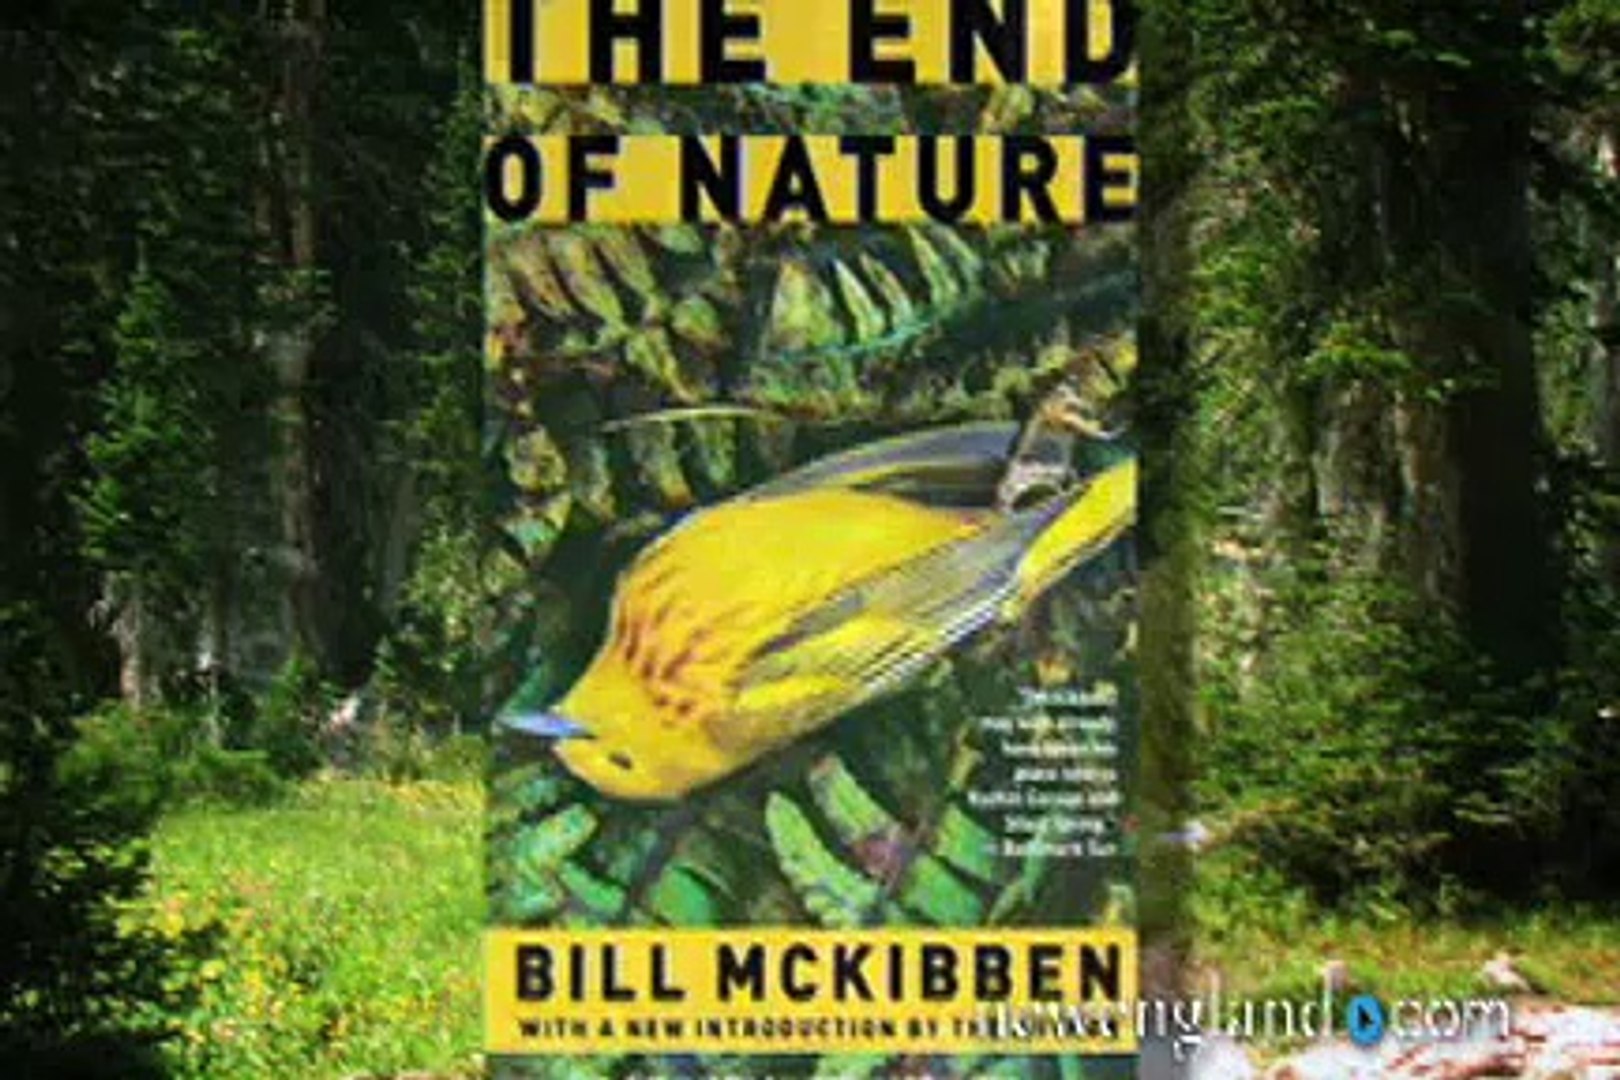 Bill McKibben, Big Environmental Activist